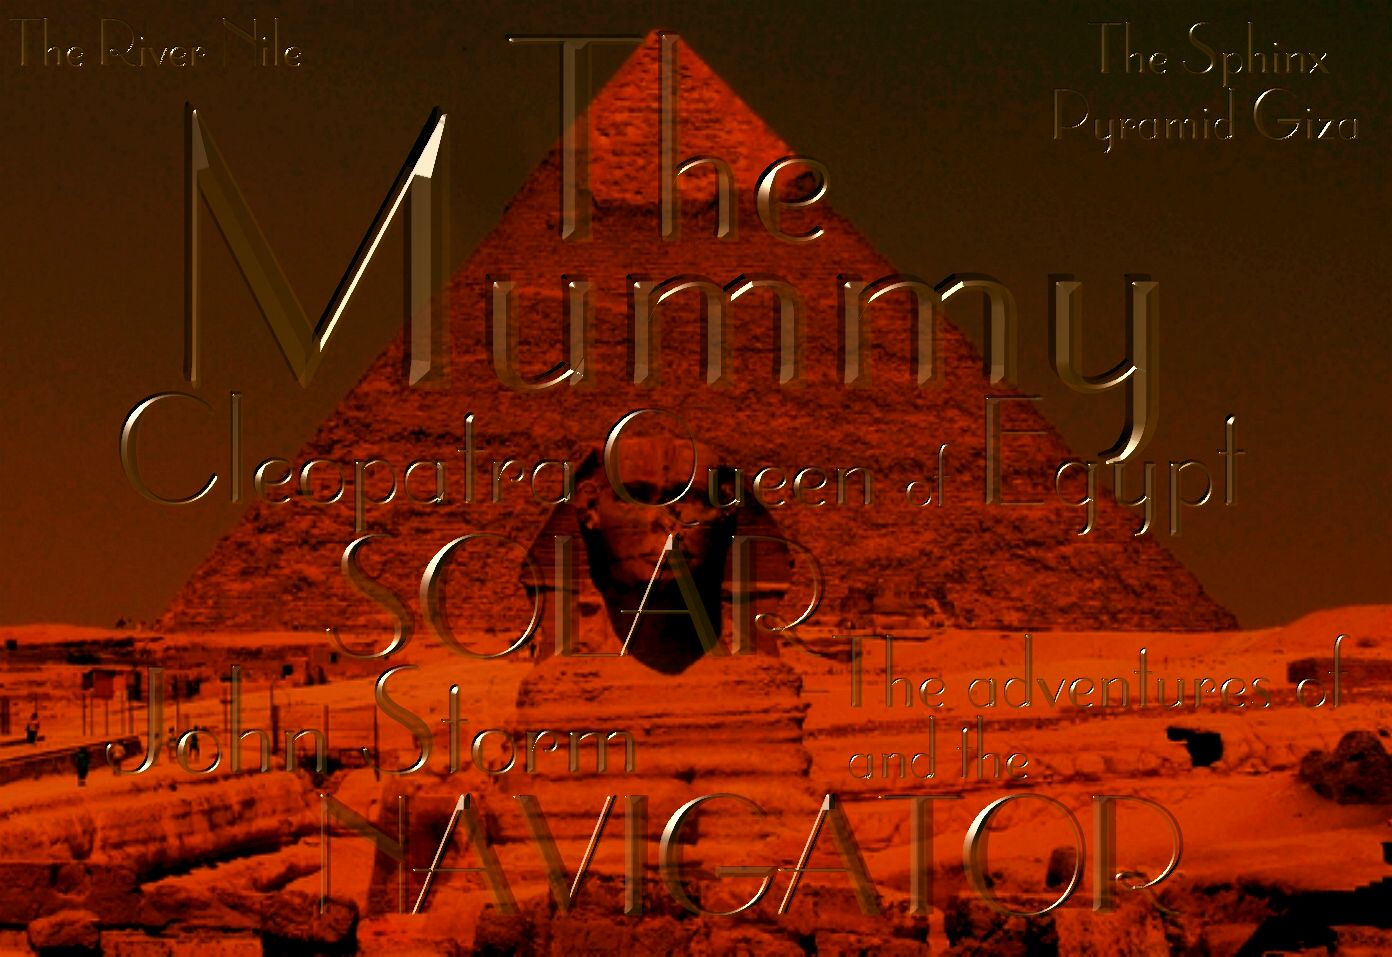 Film poster, The Pharoah Mummy, Cleopatra queen of Egypt, John Storm adventure by Jameson Hunter